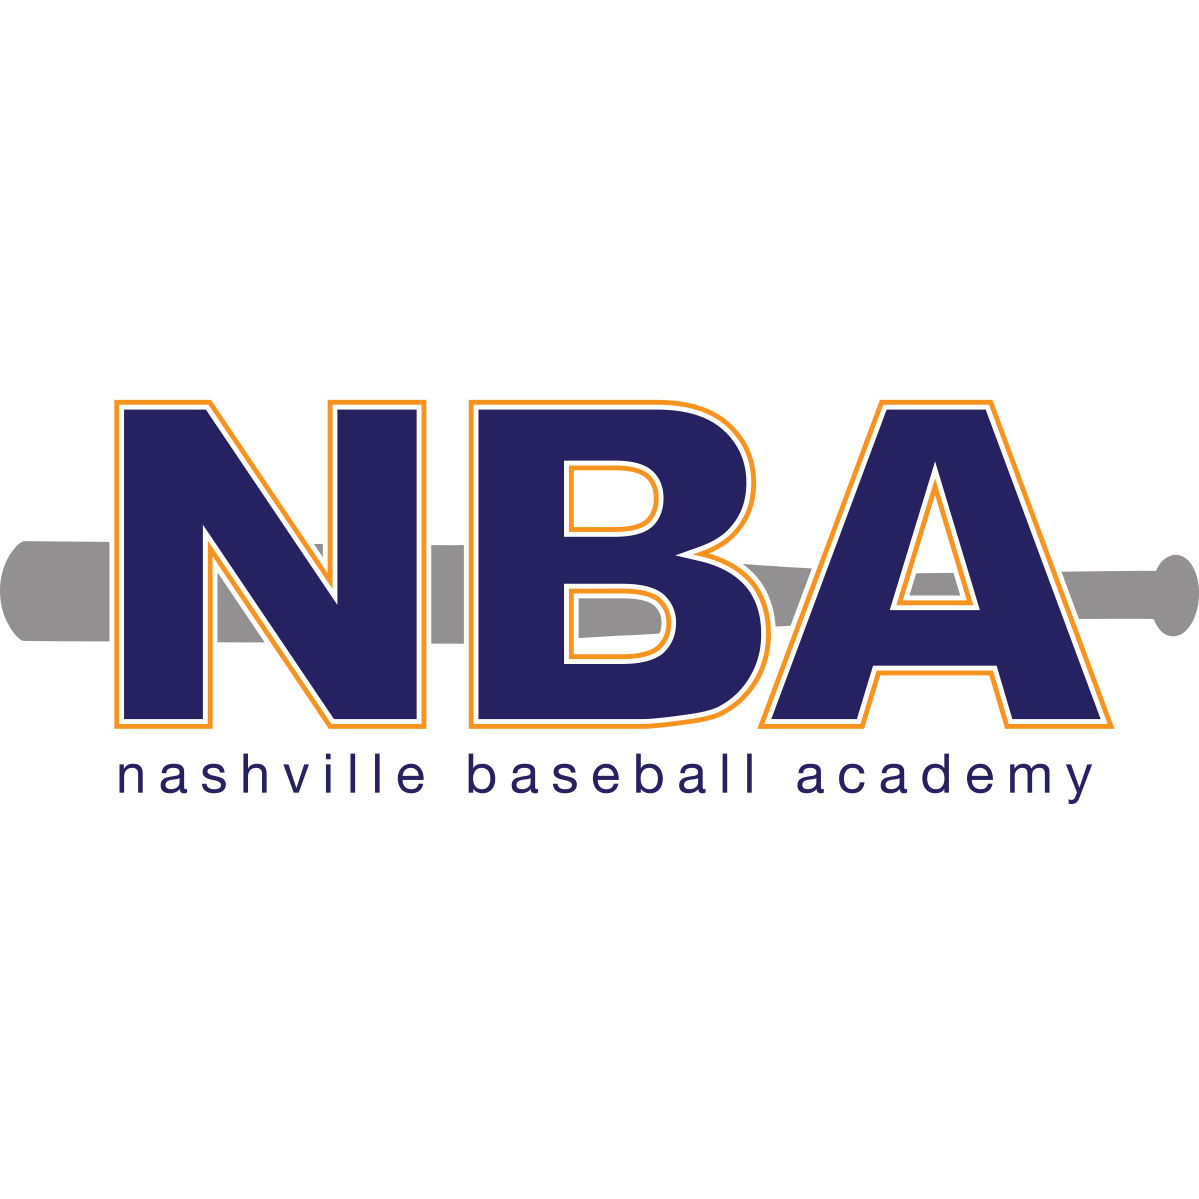 Nashville Baseball Academy Nashville (615)837-5858